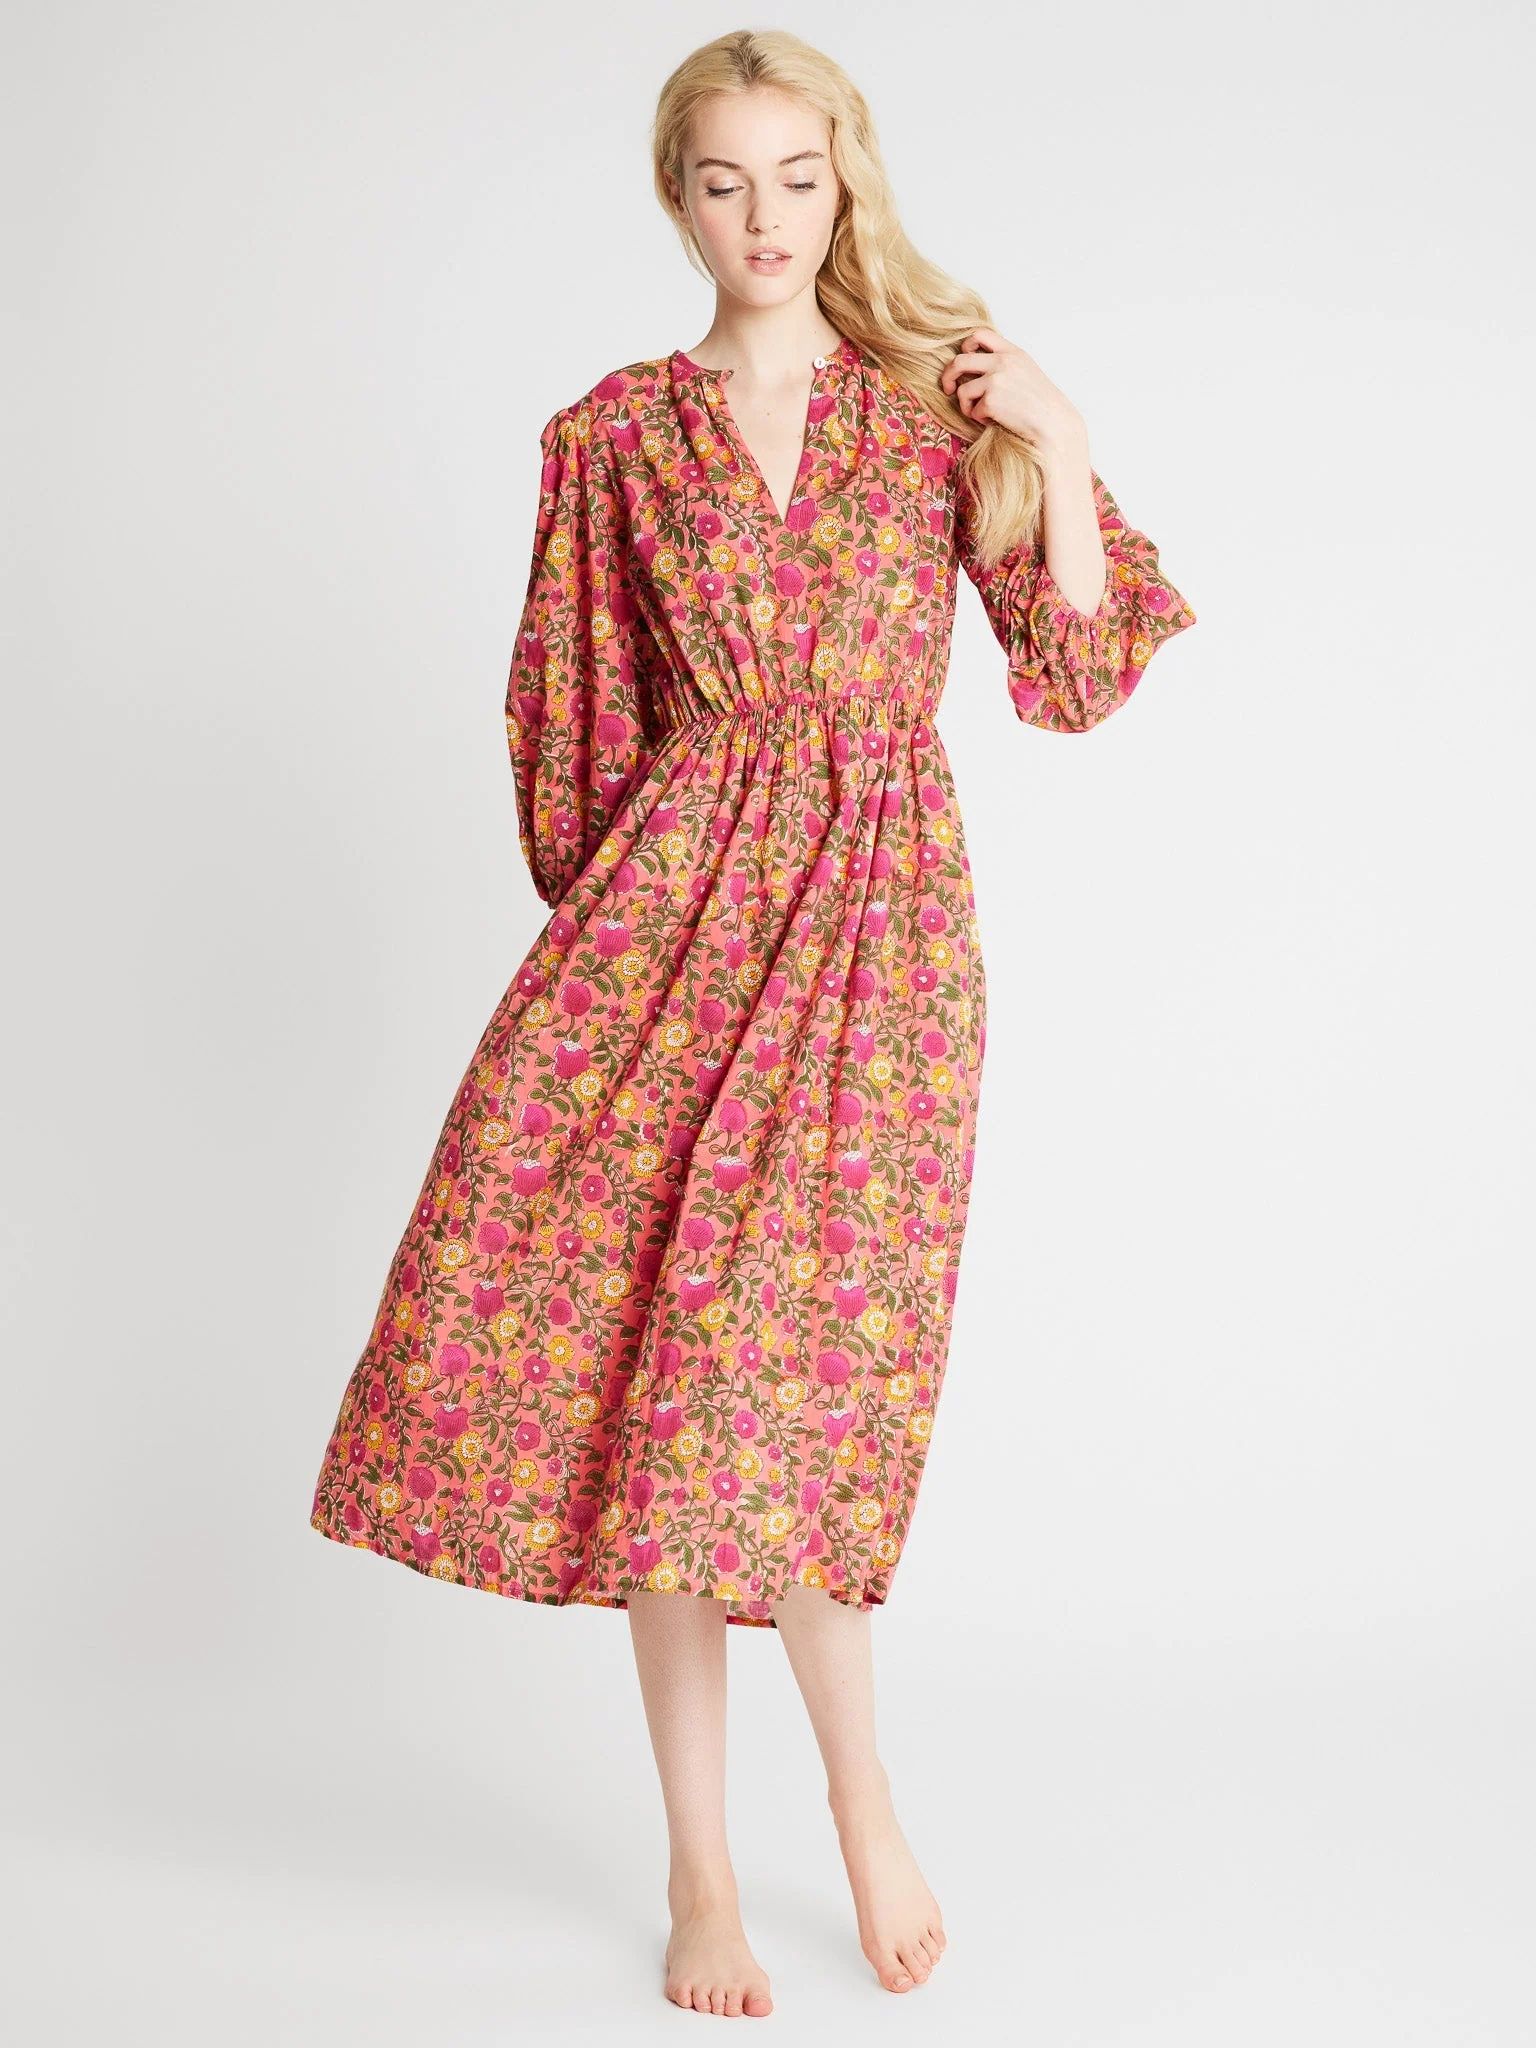 Shop Mille - Celeste Dress in Passionfruit | Mille